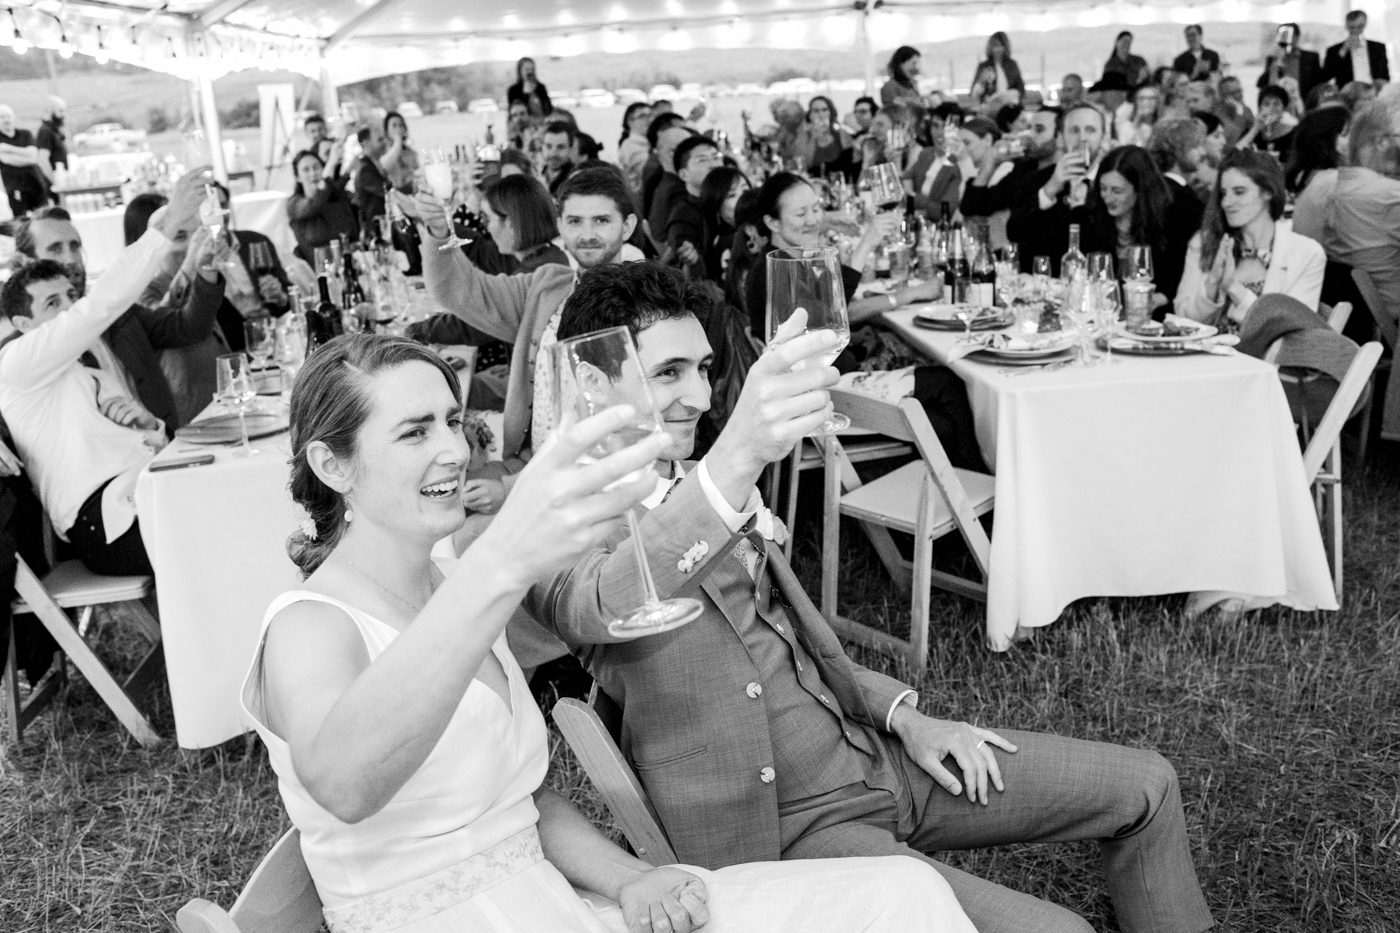 Wedding-toasts-to-newlyweds